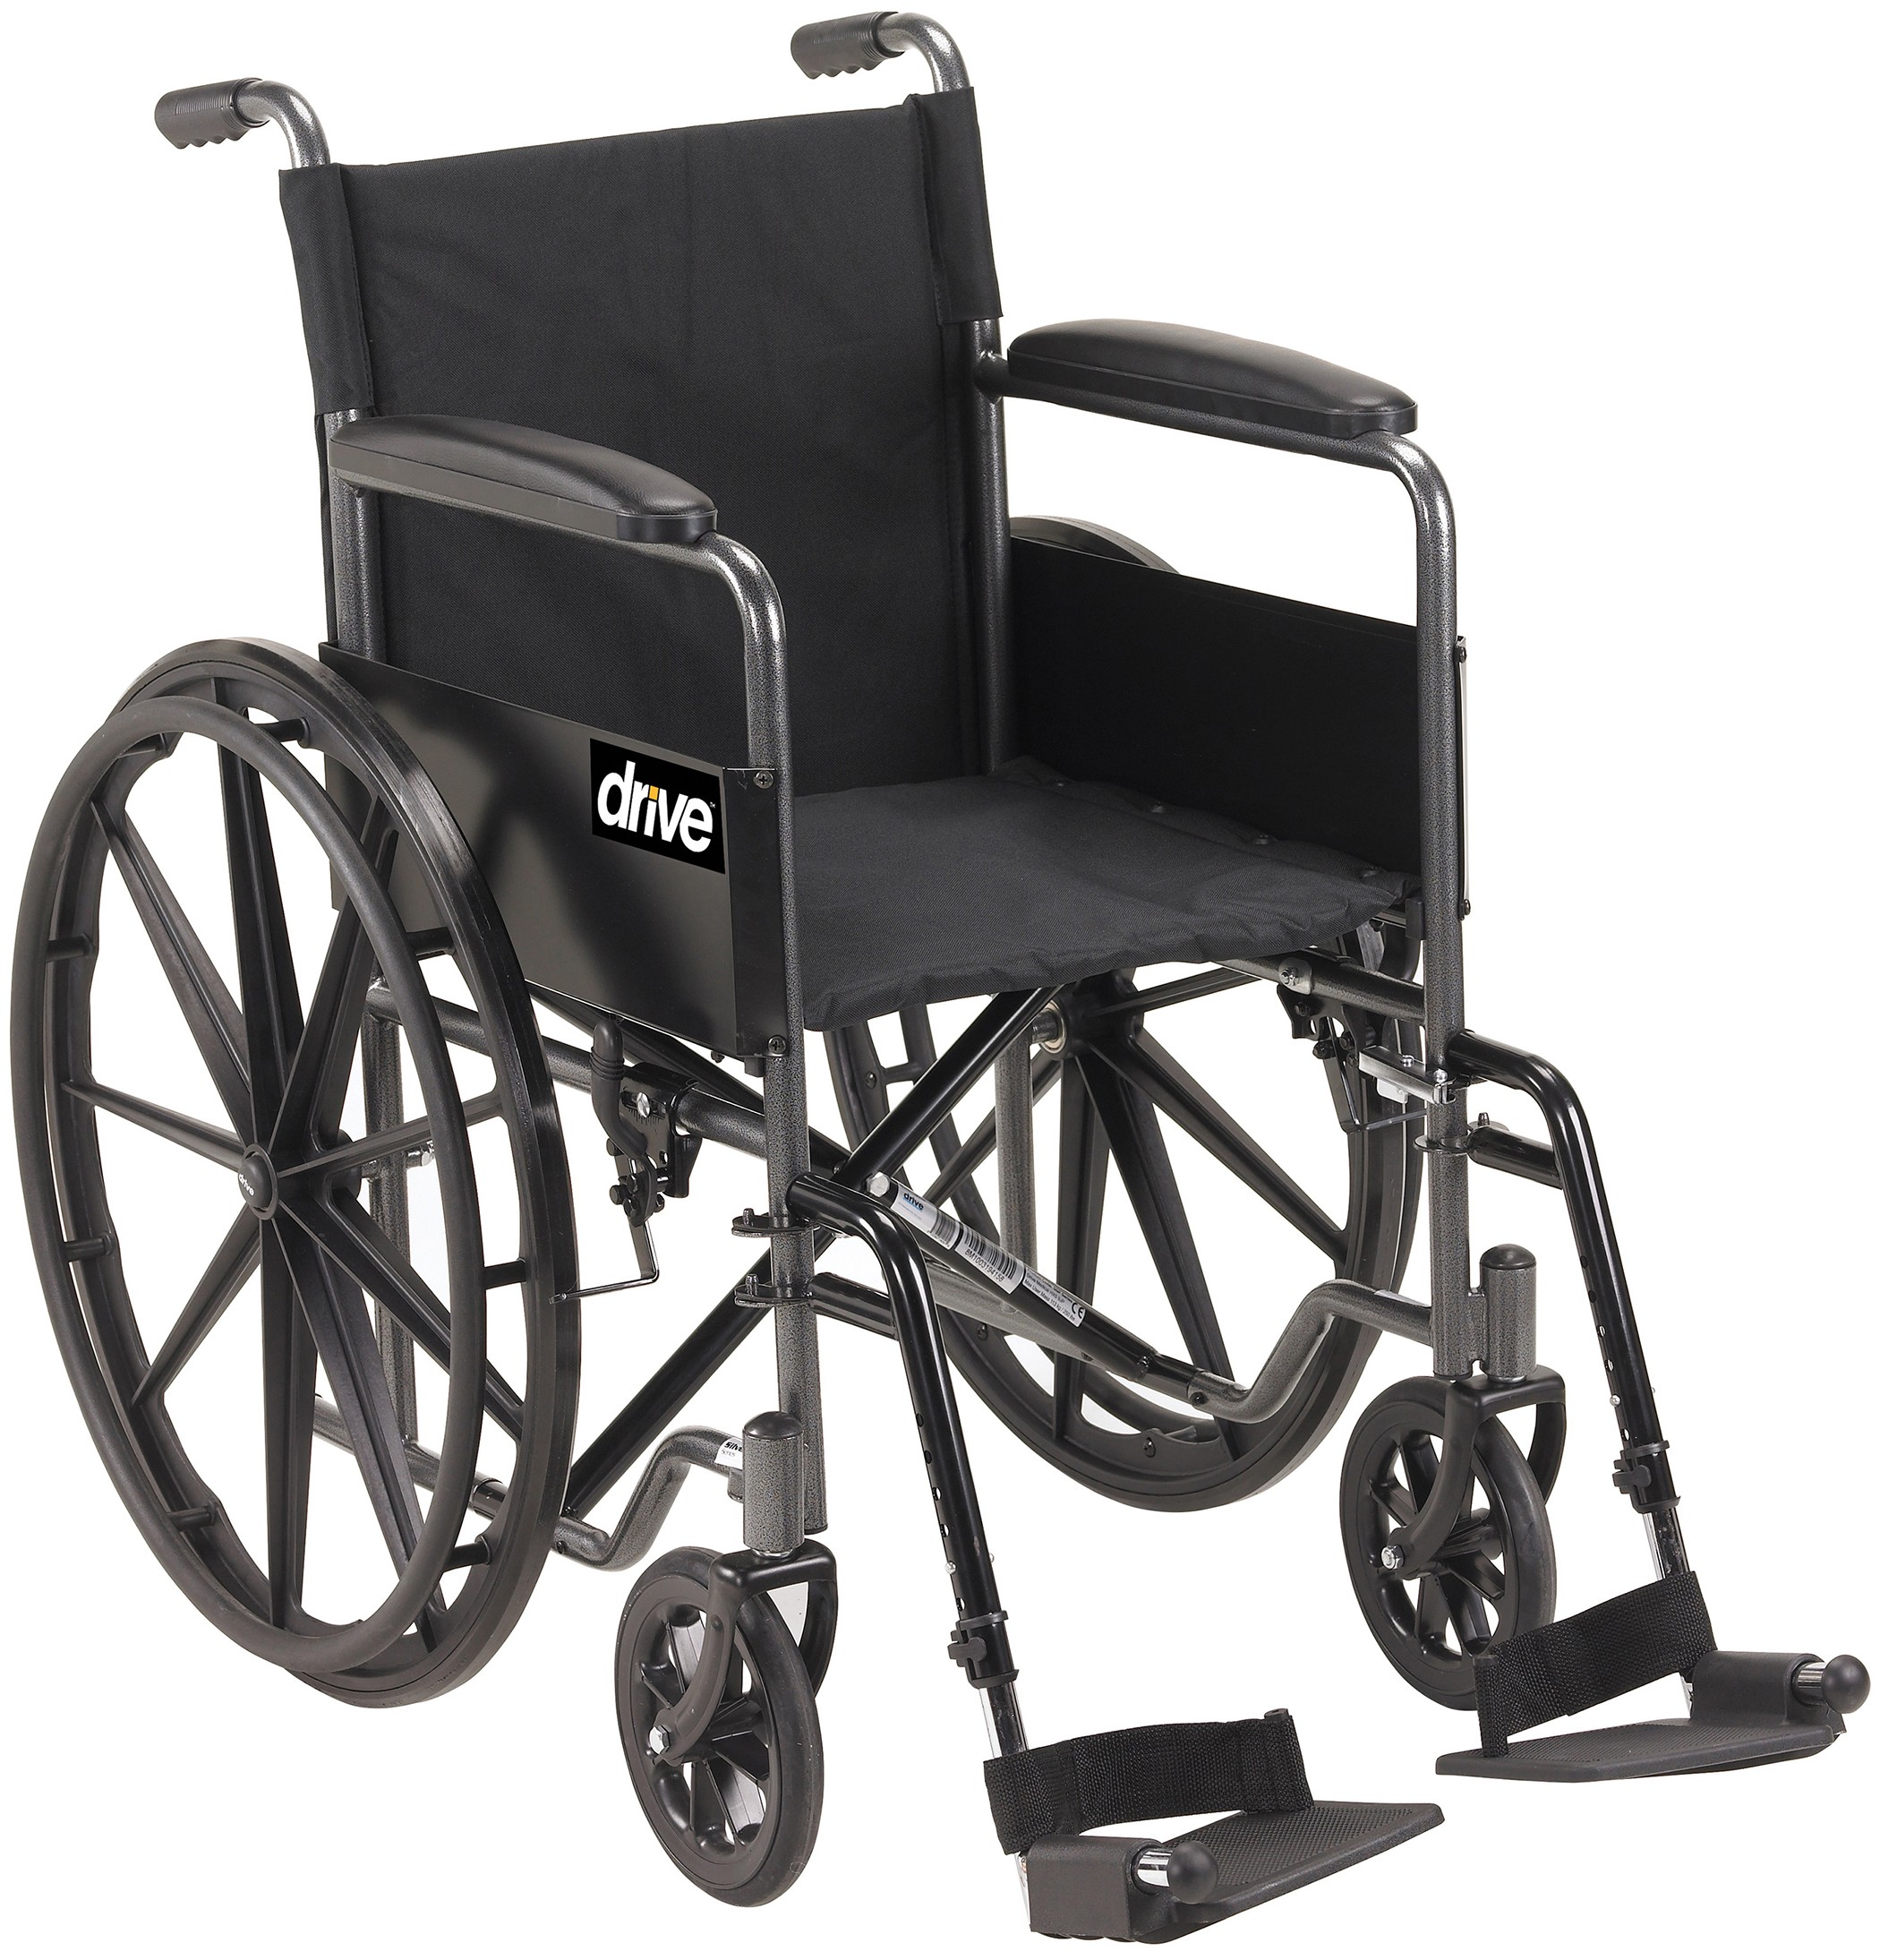 Standard manual wheelchair